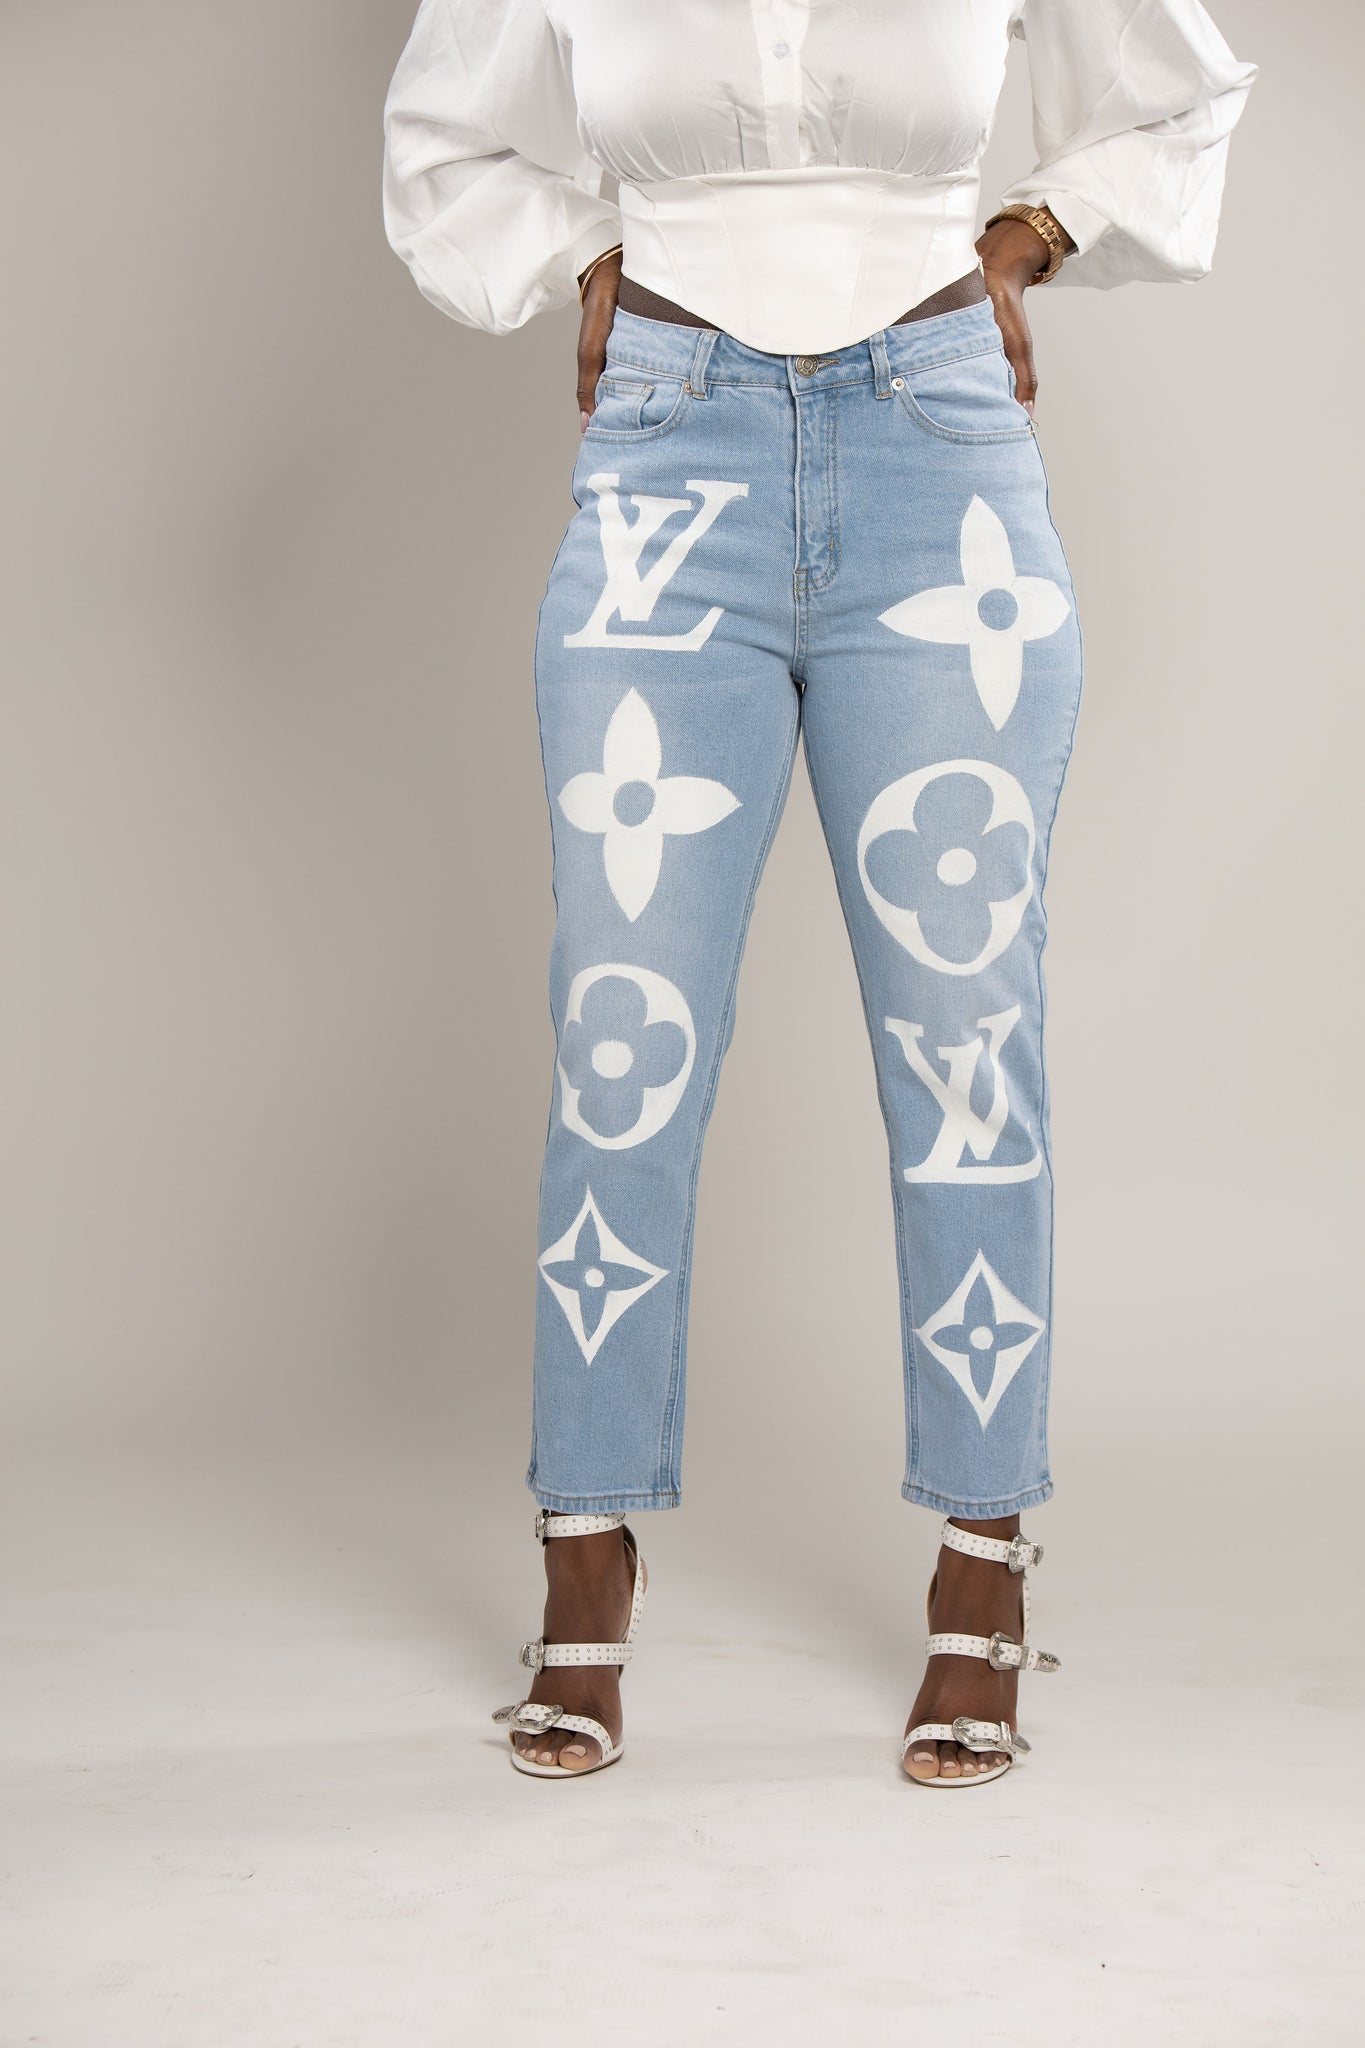 Custom Louis Vuitton Jeans  Custom jeans diy, Custom jeans, Denim diy  clothes